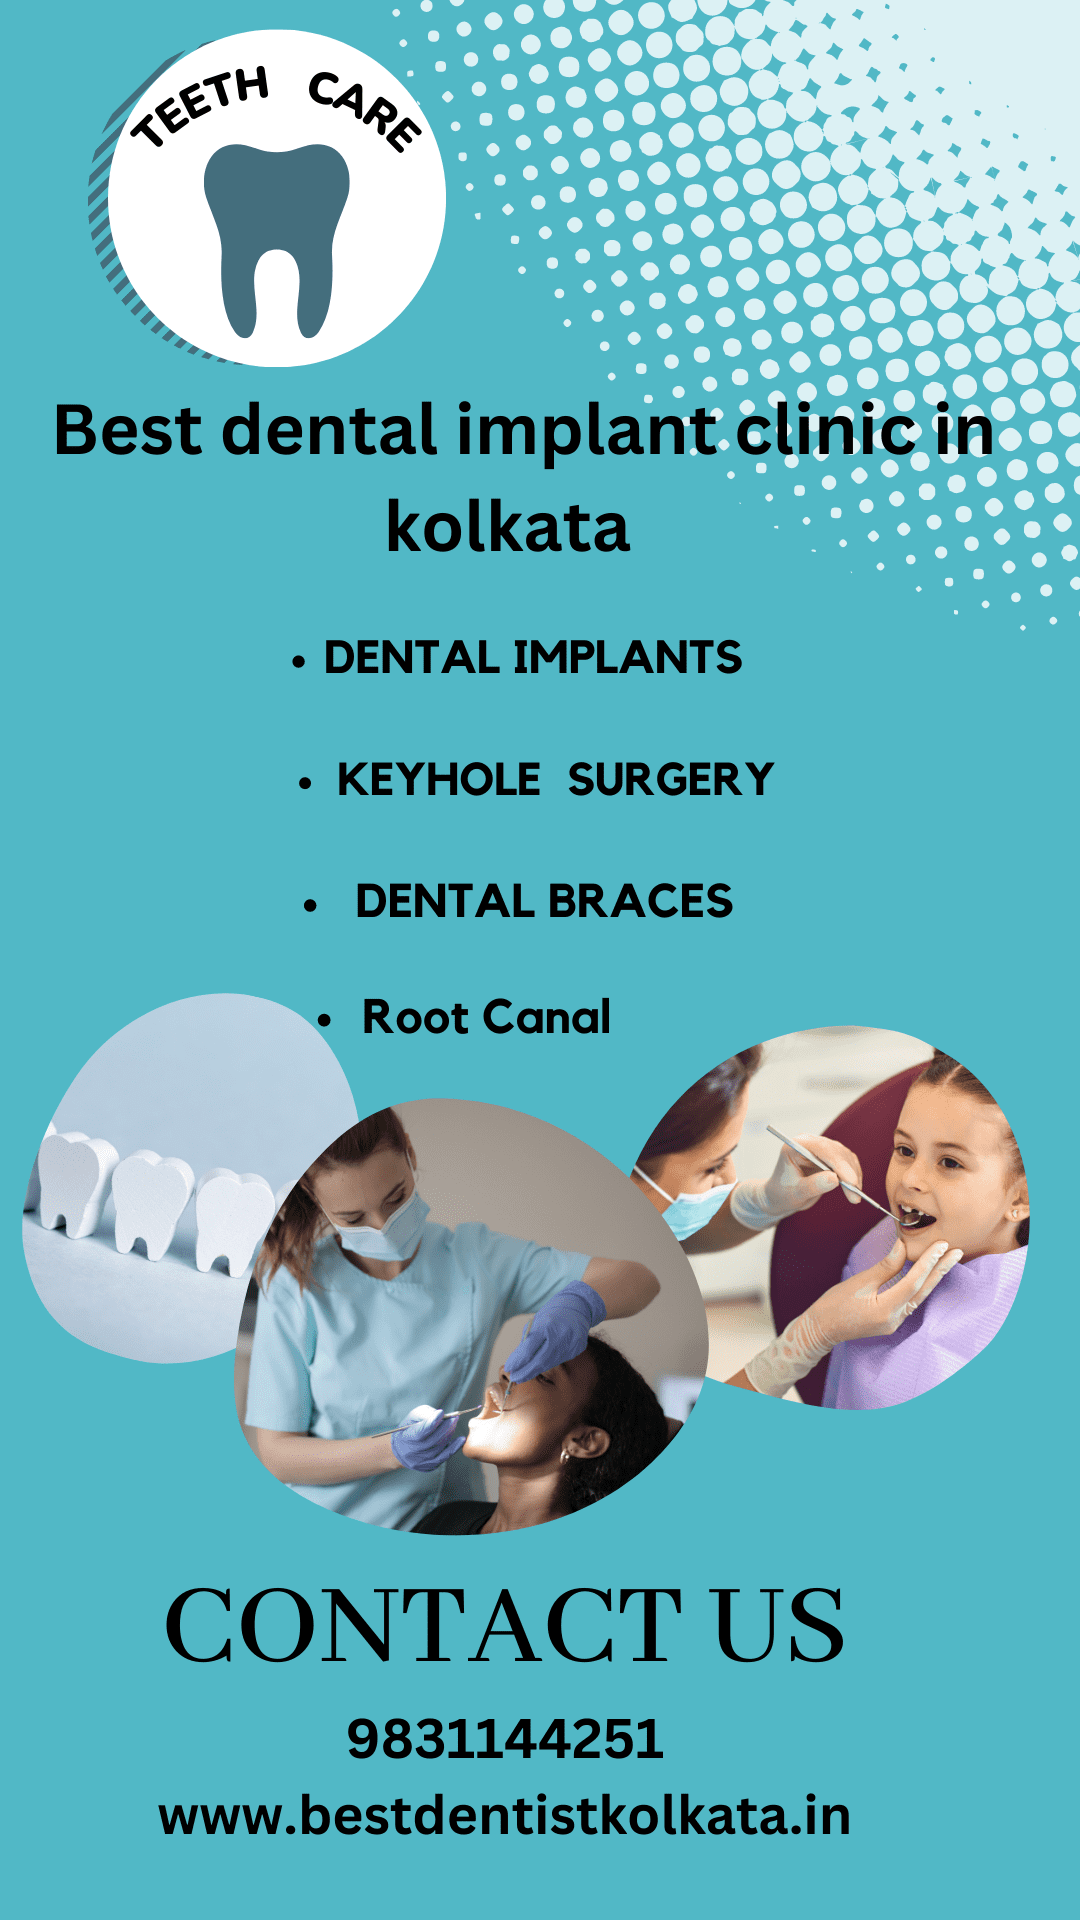 Teeth Care:Best dental implant clinic in kolkata - Kolkata Health, Personal Trainer